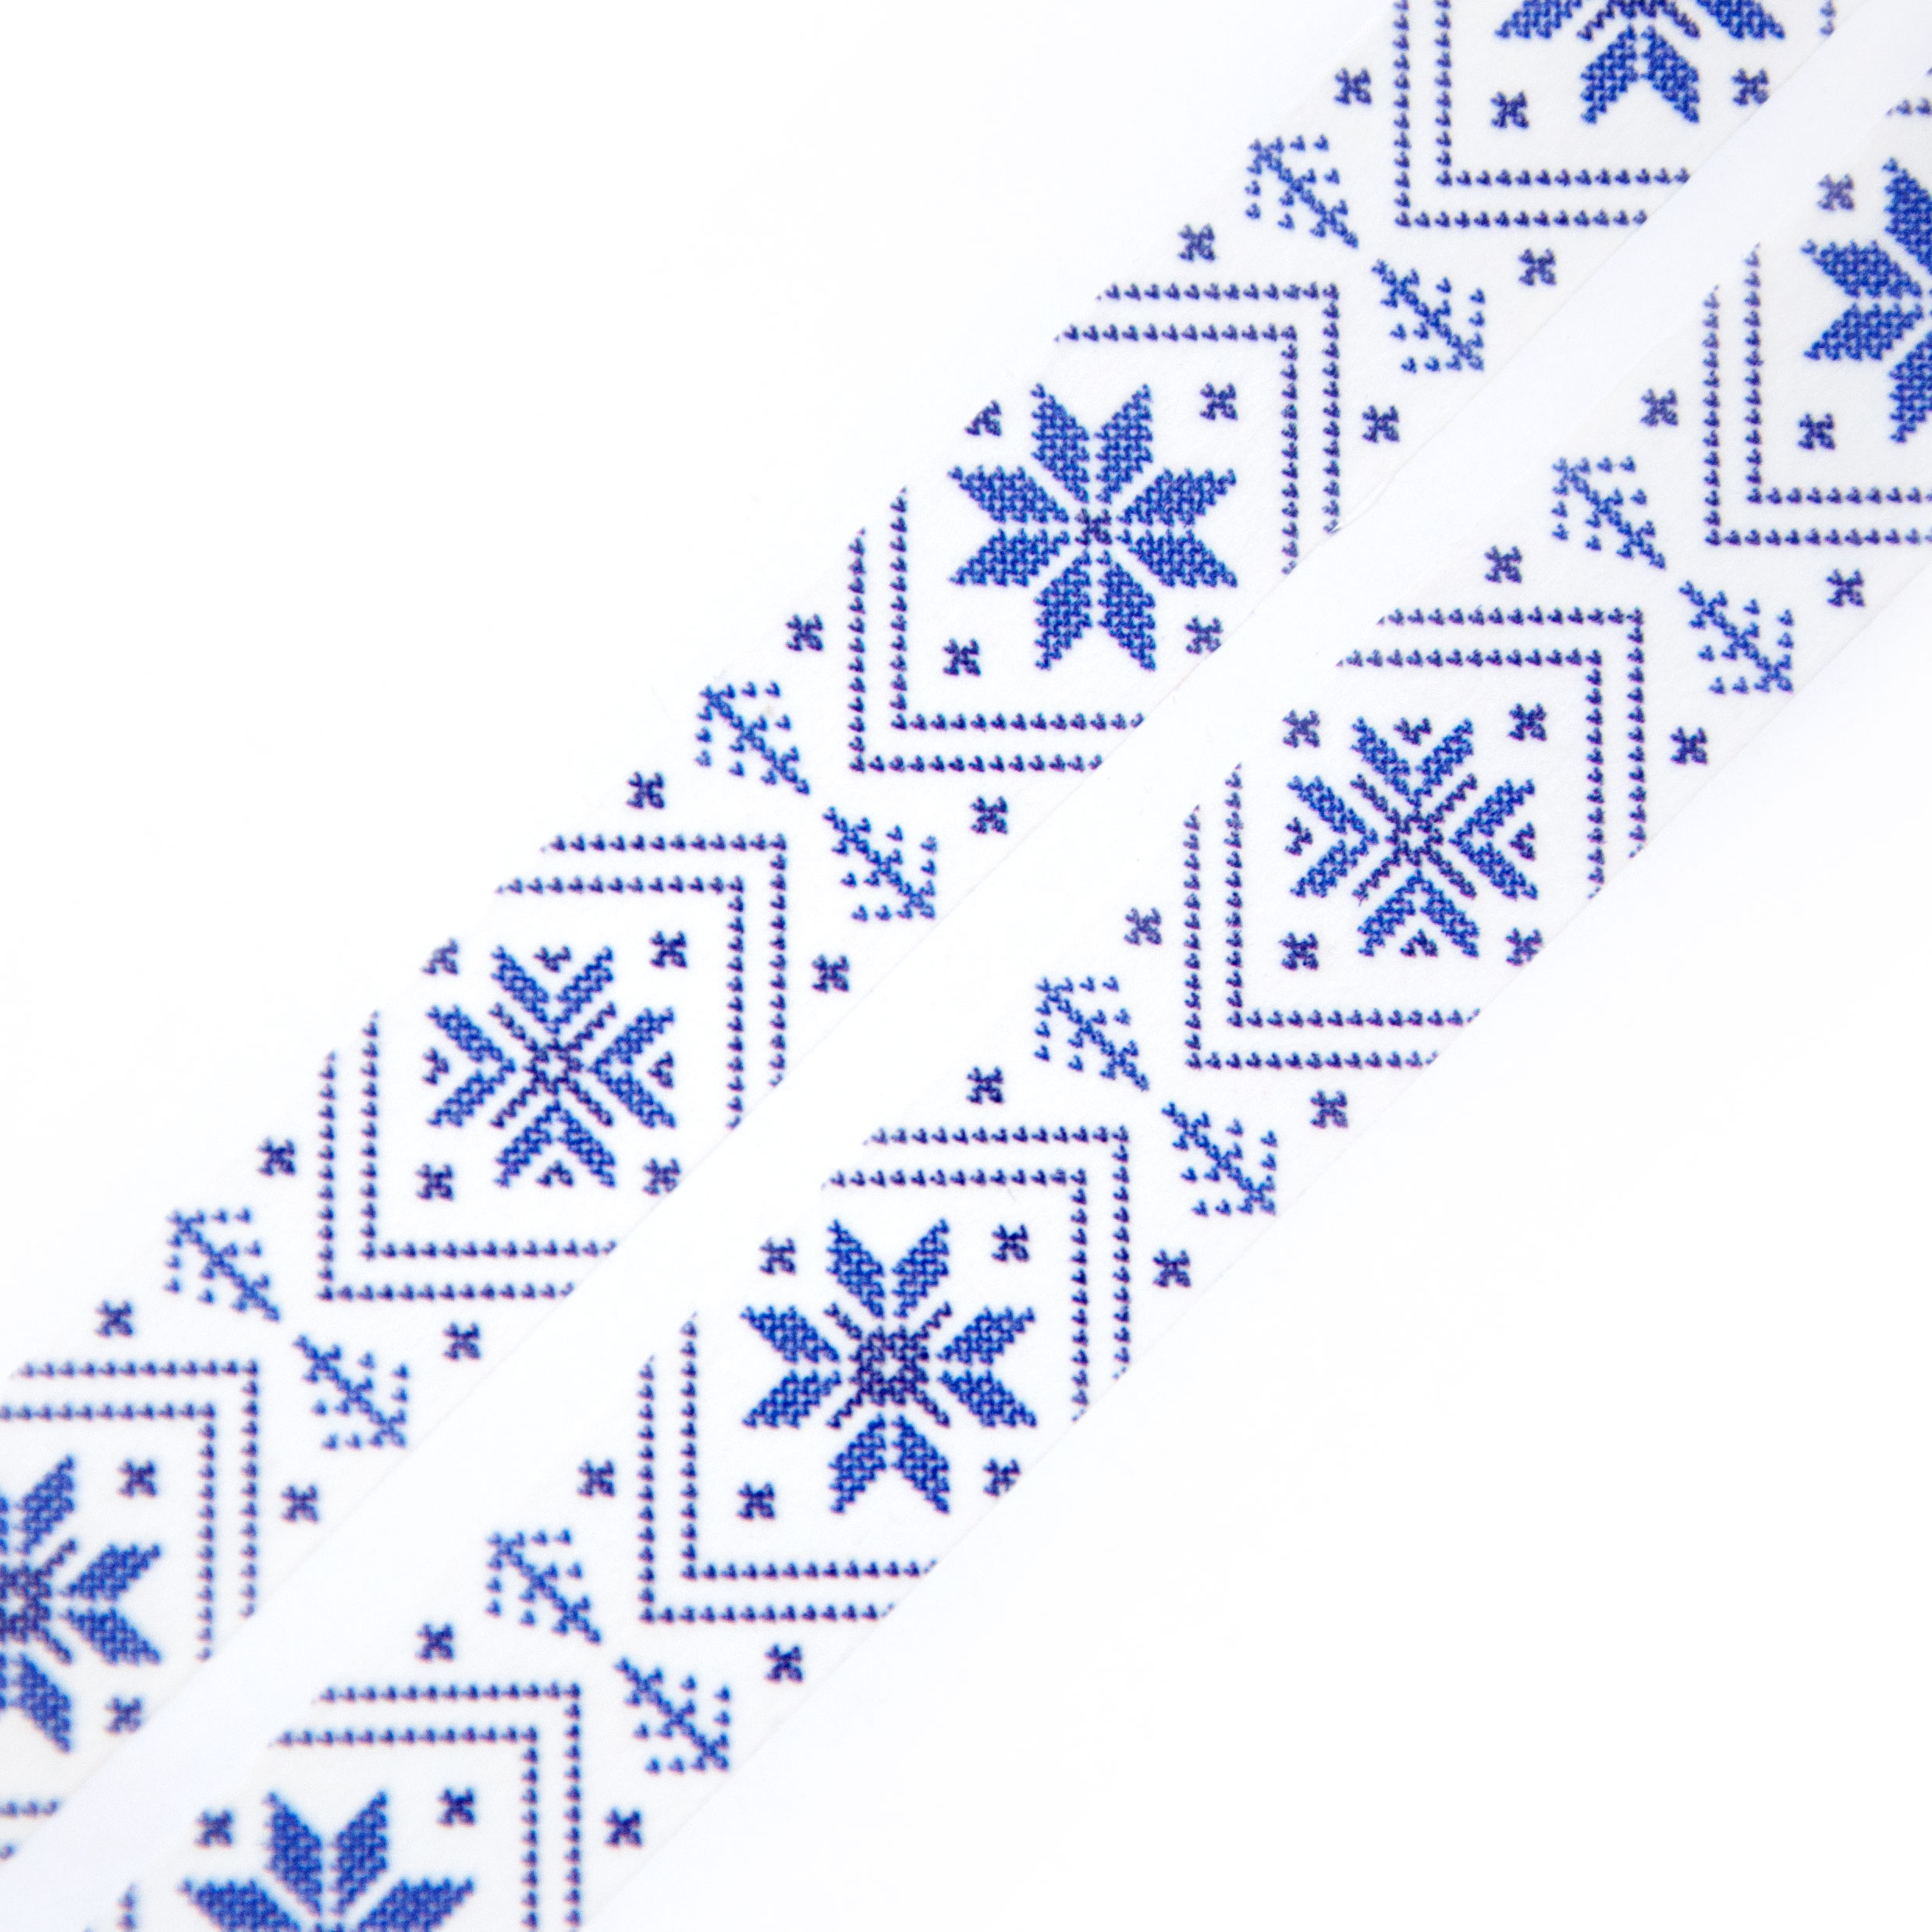 Swedish Knitted Stars Washi Tape - Design by Willwa